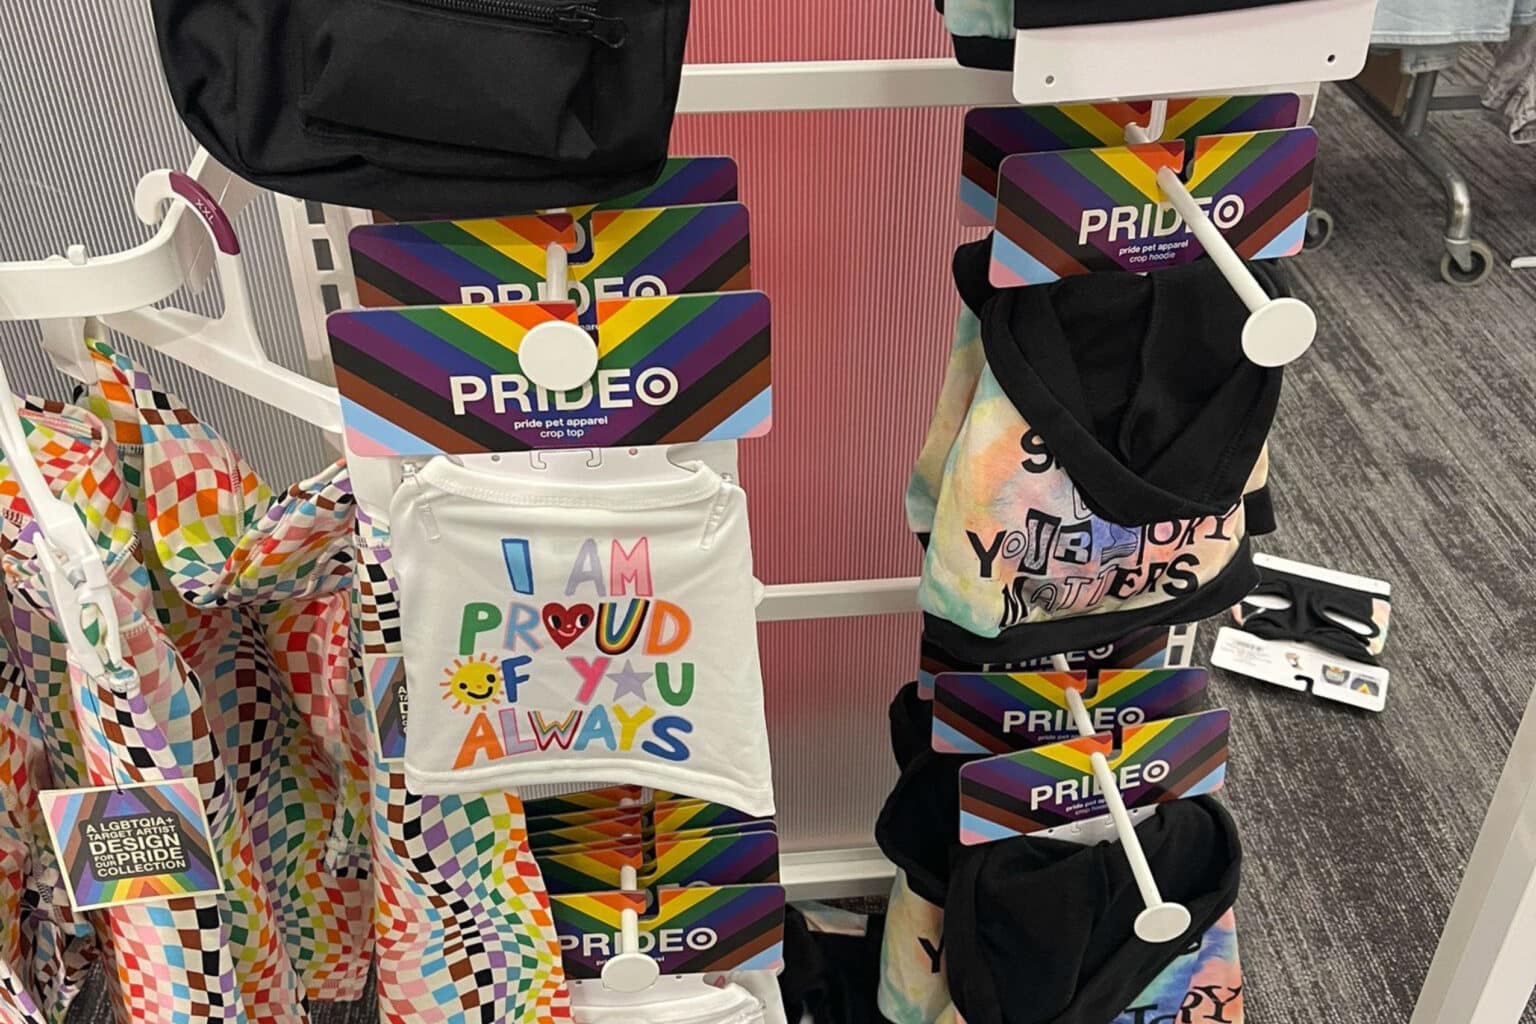 Target holds 'emergency meeting' following backlash over Pride